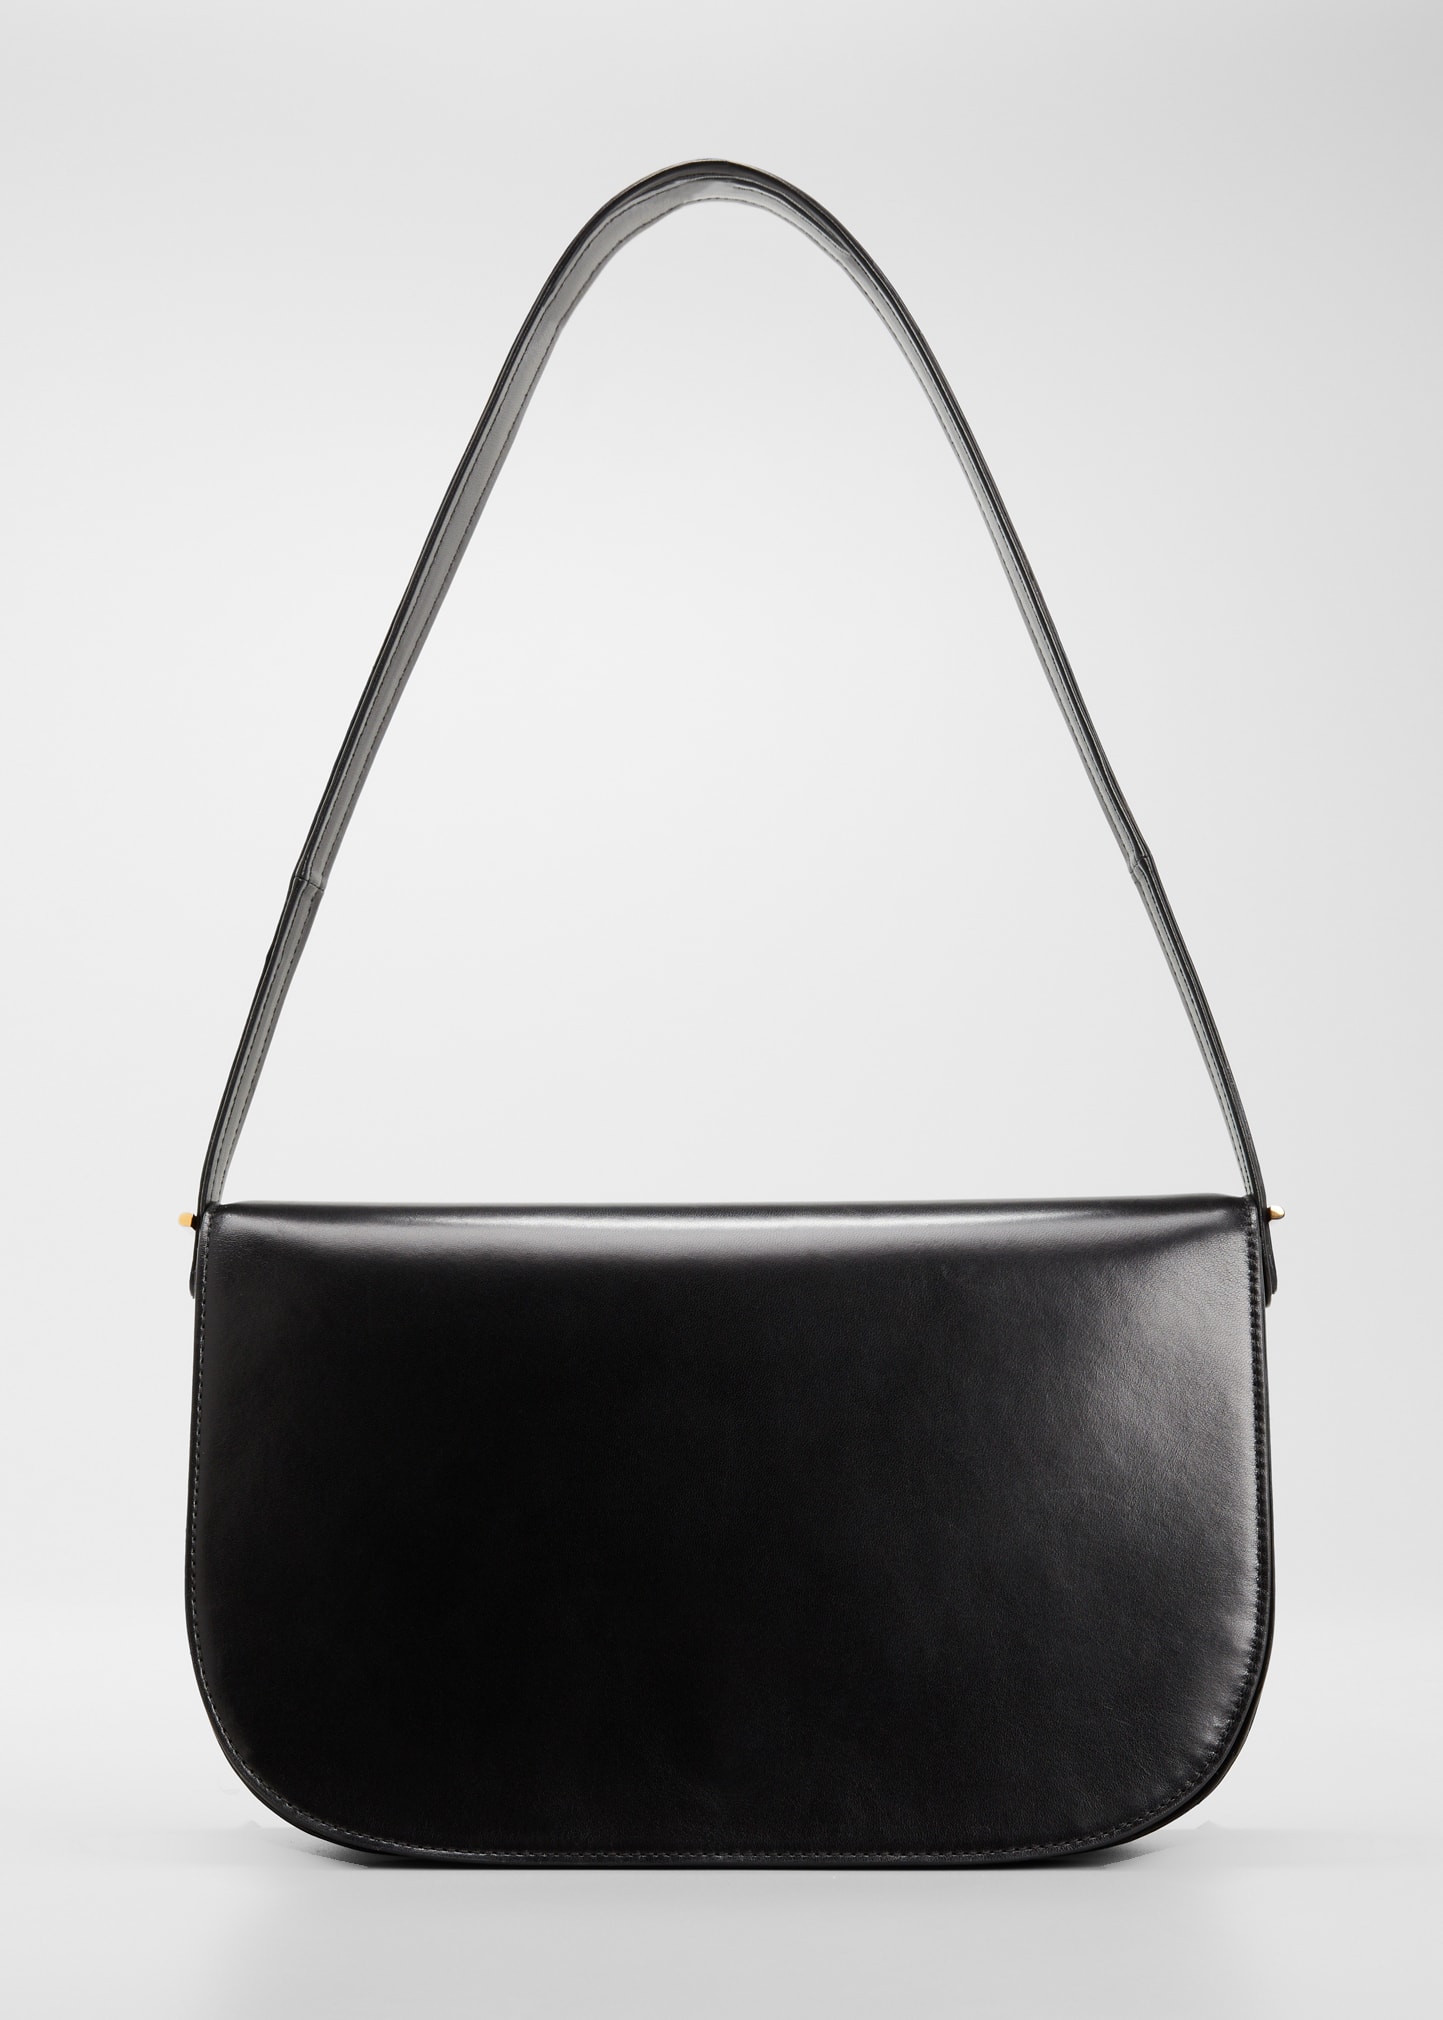 THE ROW Handbags : Shoulder & Crossbody Bags at Bergdorf Goodman